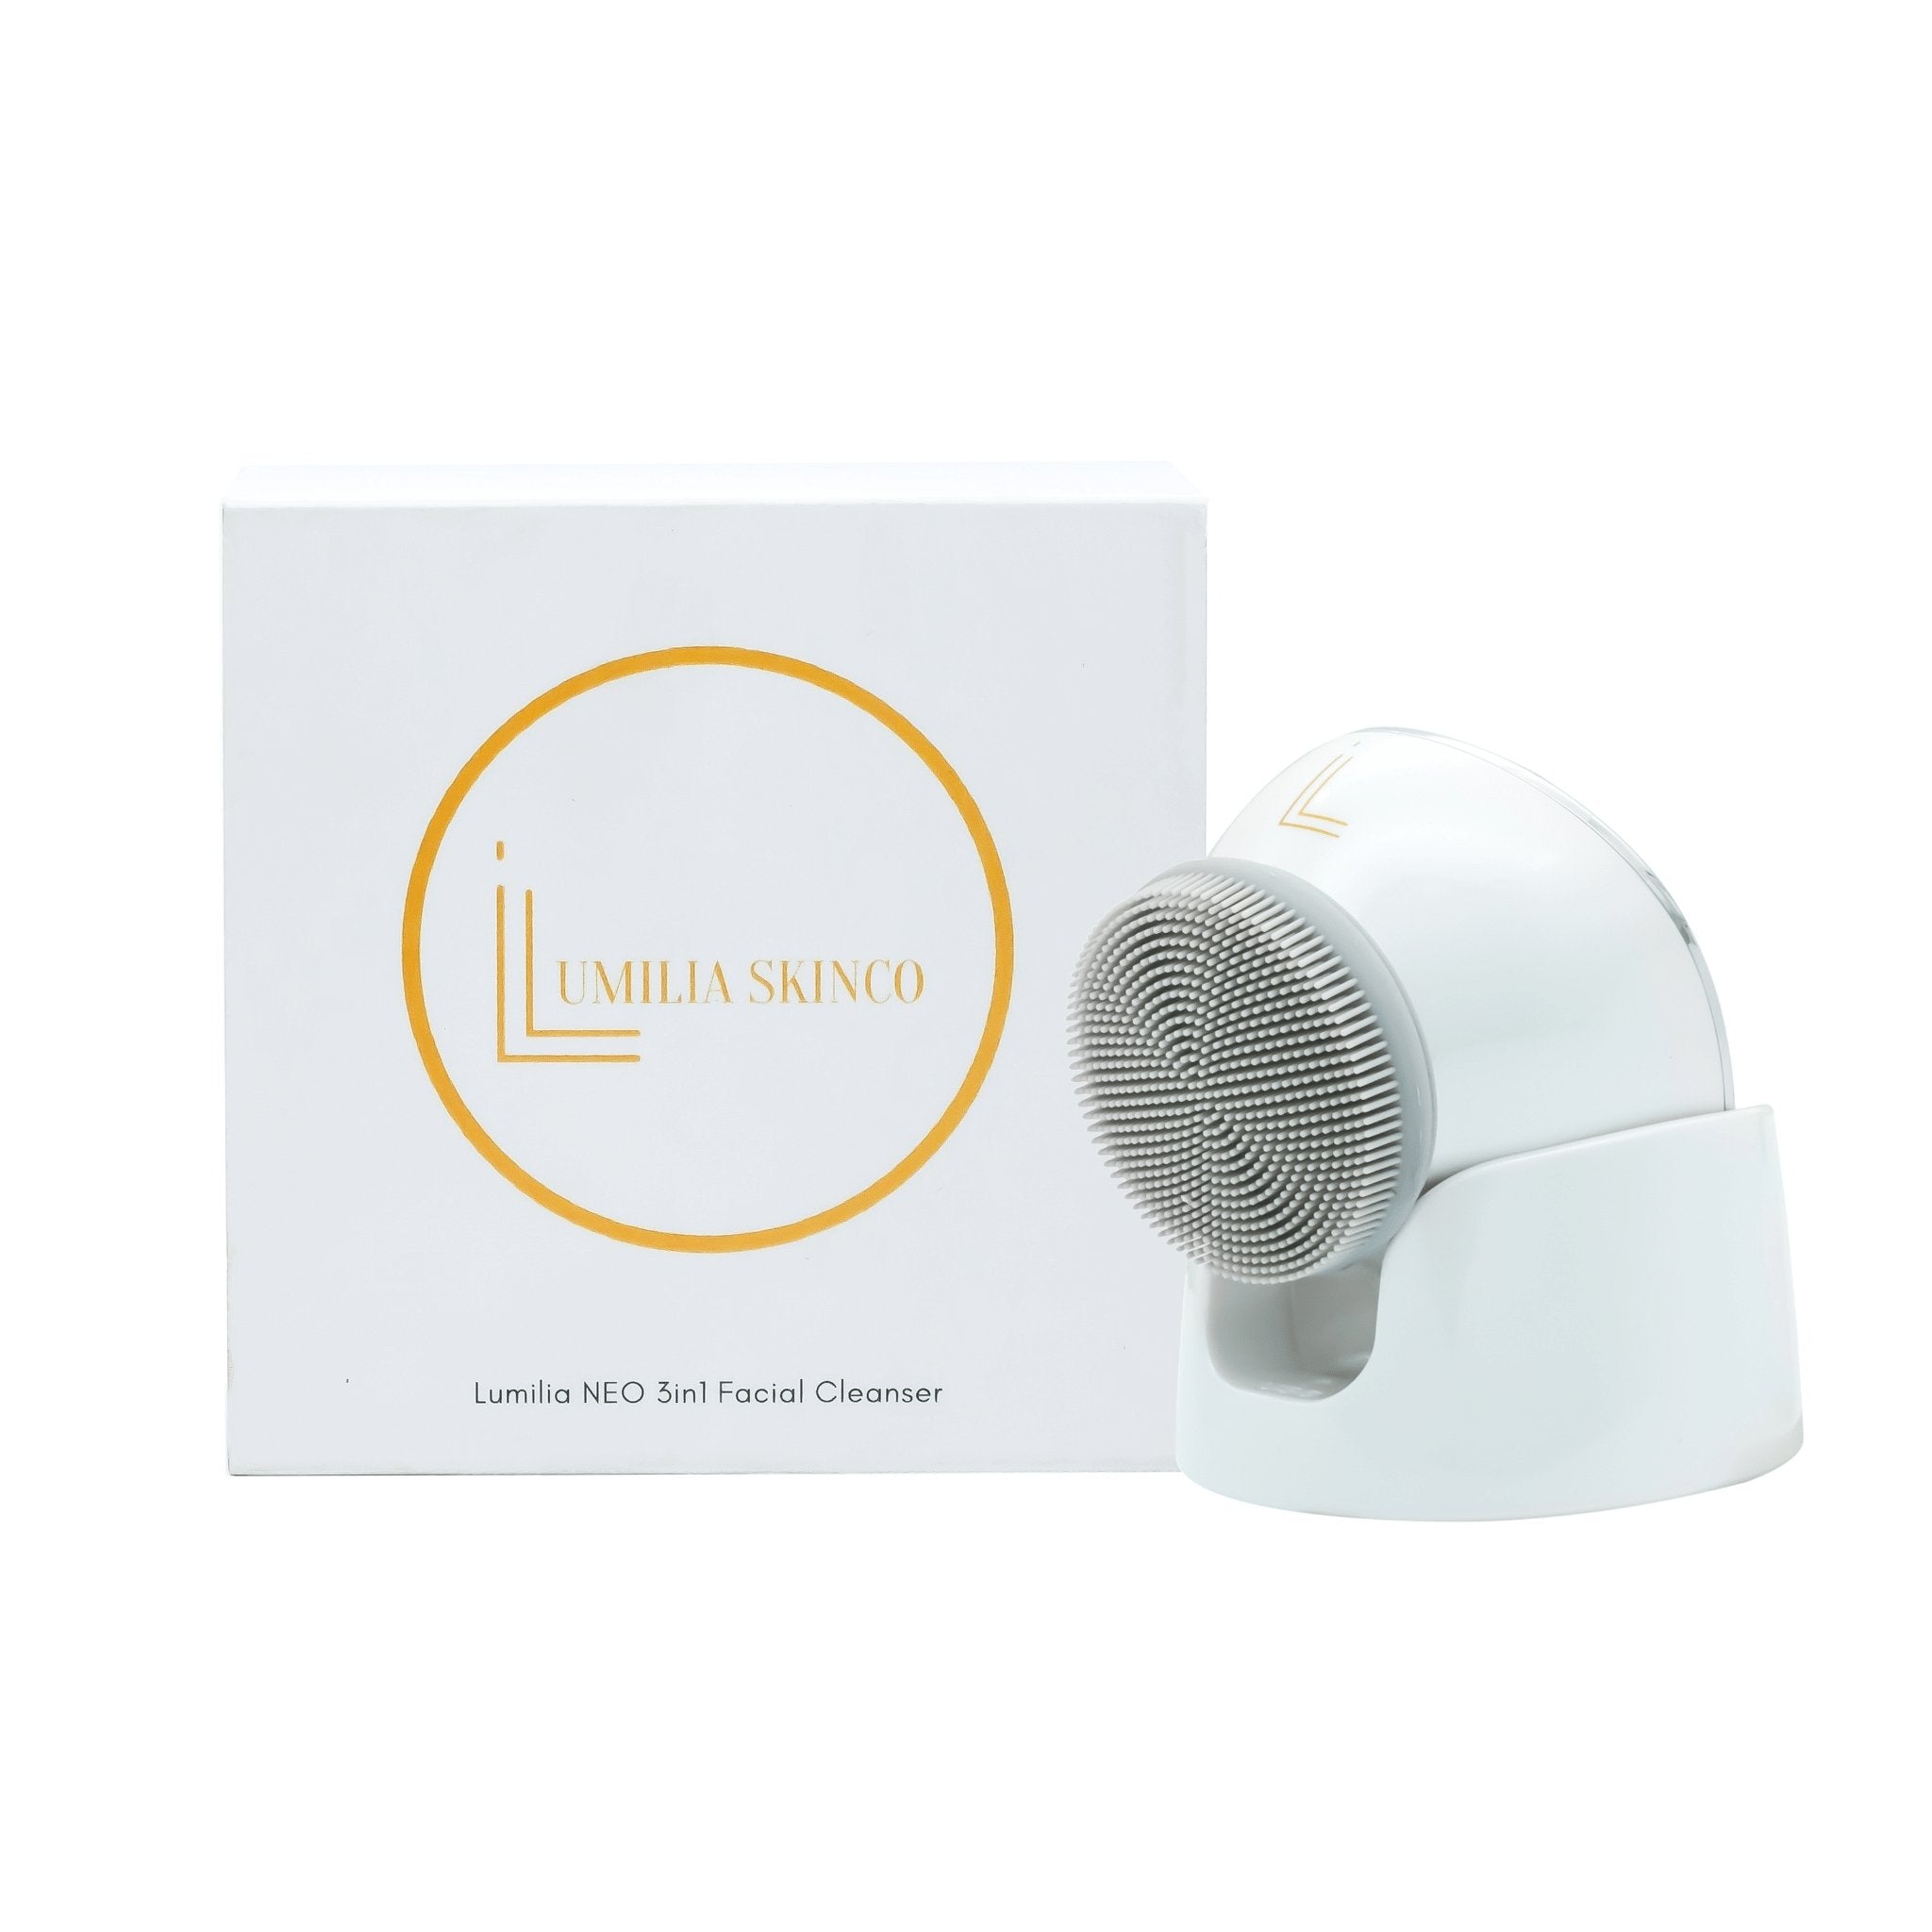 Lumilia NEO 3in1 Facial Cleansing & Massage Device - Lumilia Skin Co.